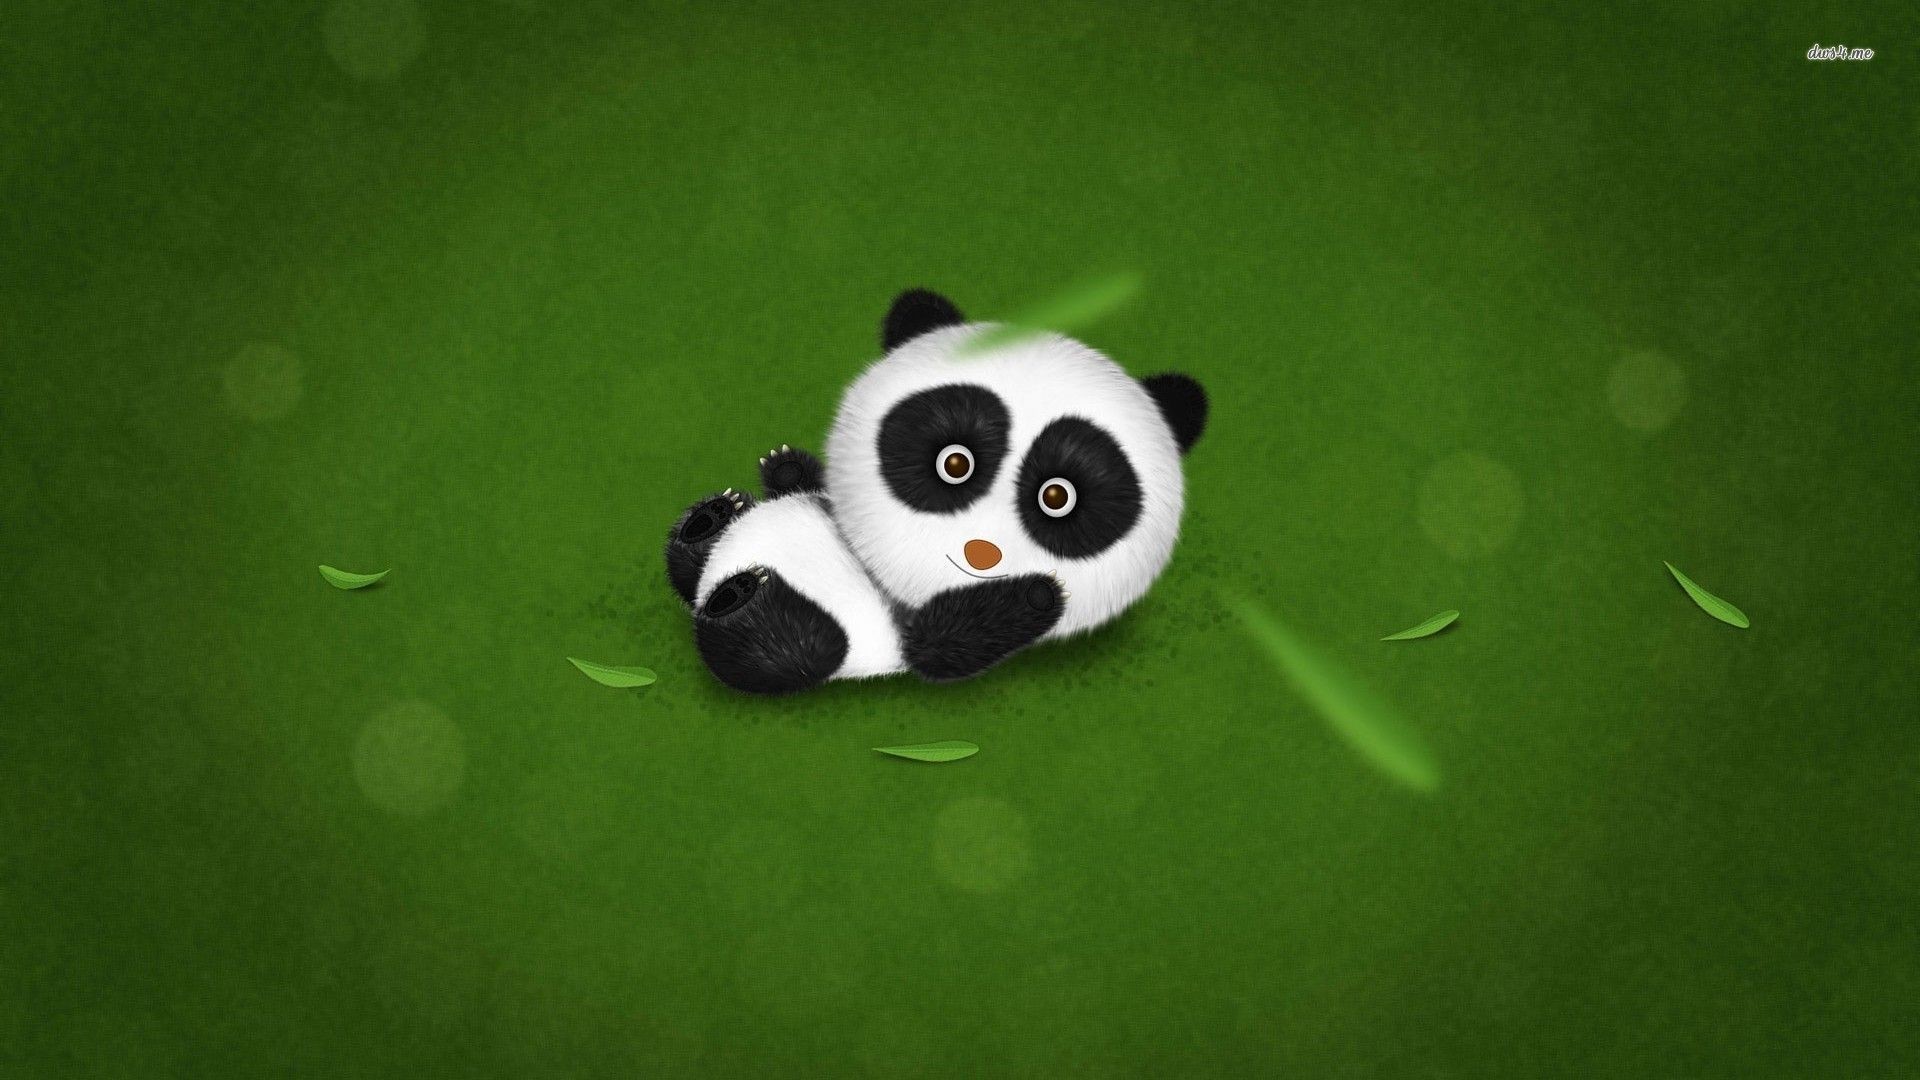 Baby Panda Wallpaper For Desktop Background 13 Hd Wallpapers 1920x1080